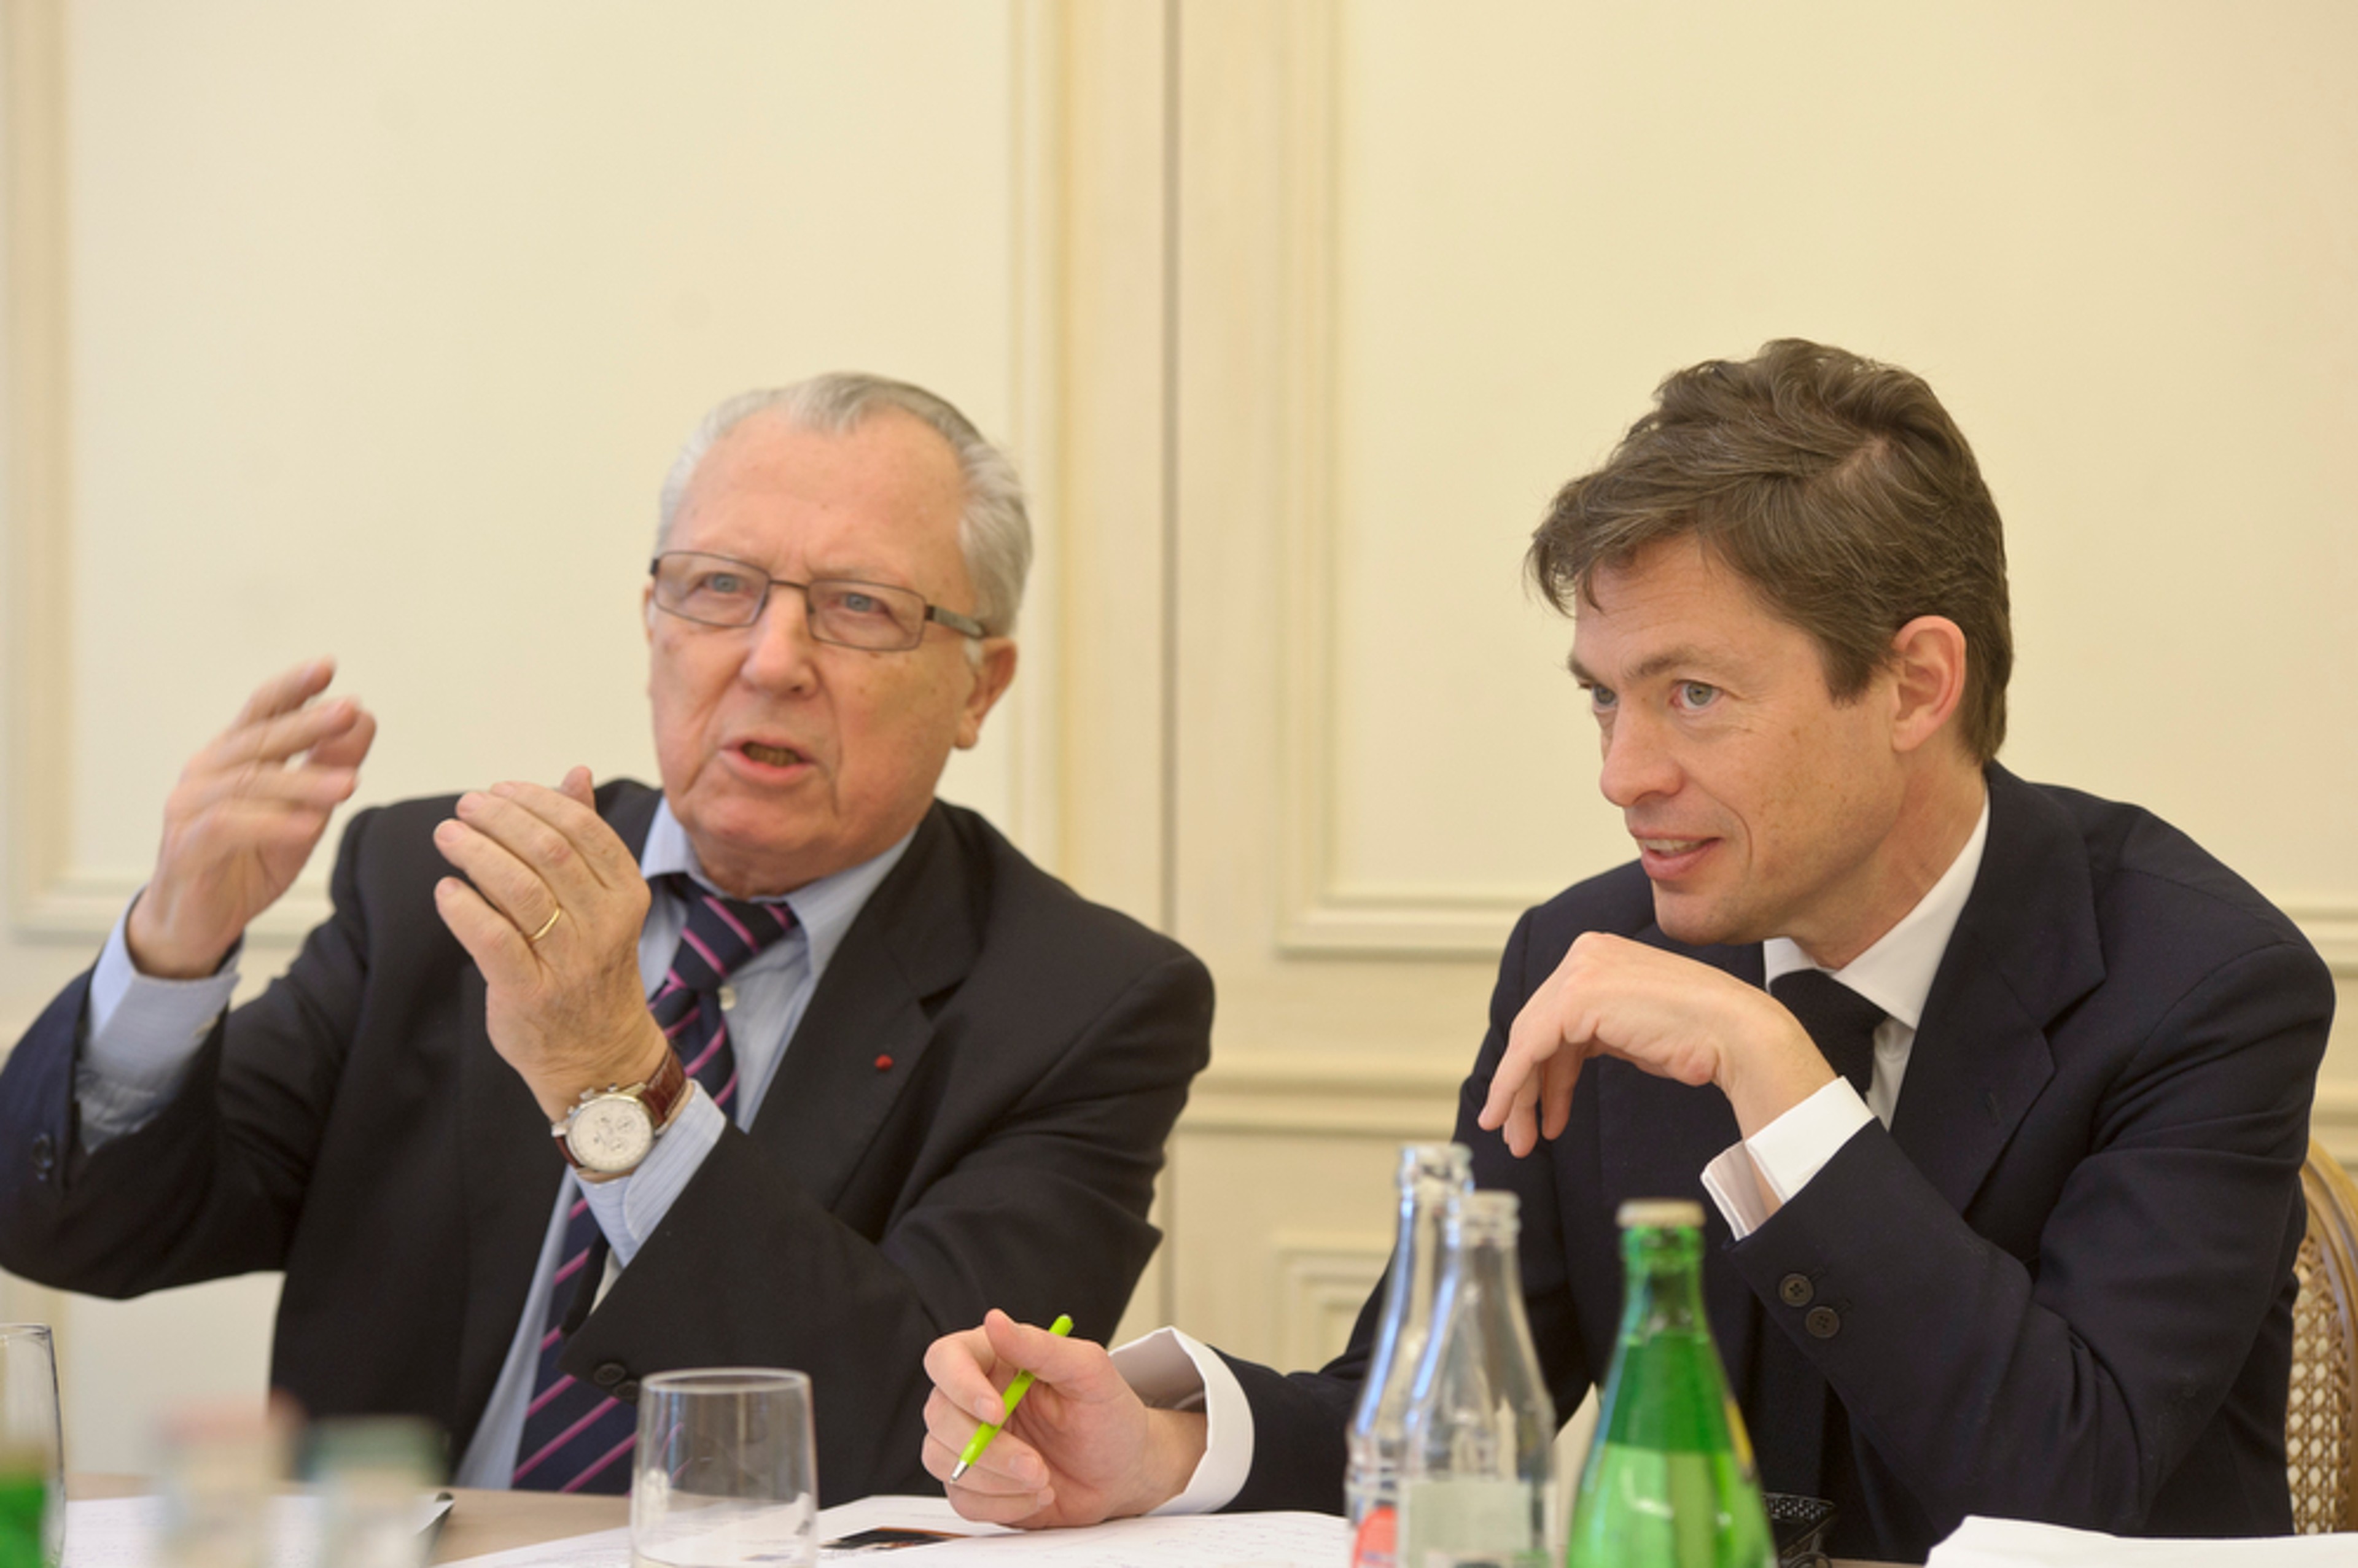 Jacques Delors and Nicolas Berggruen at CFE meeting in Paris